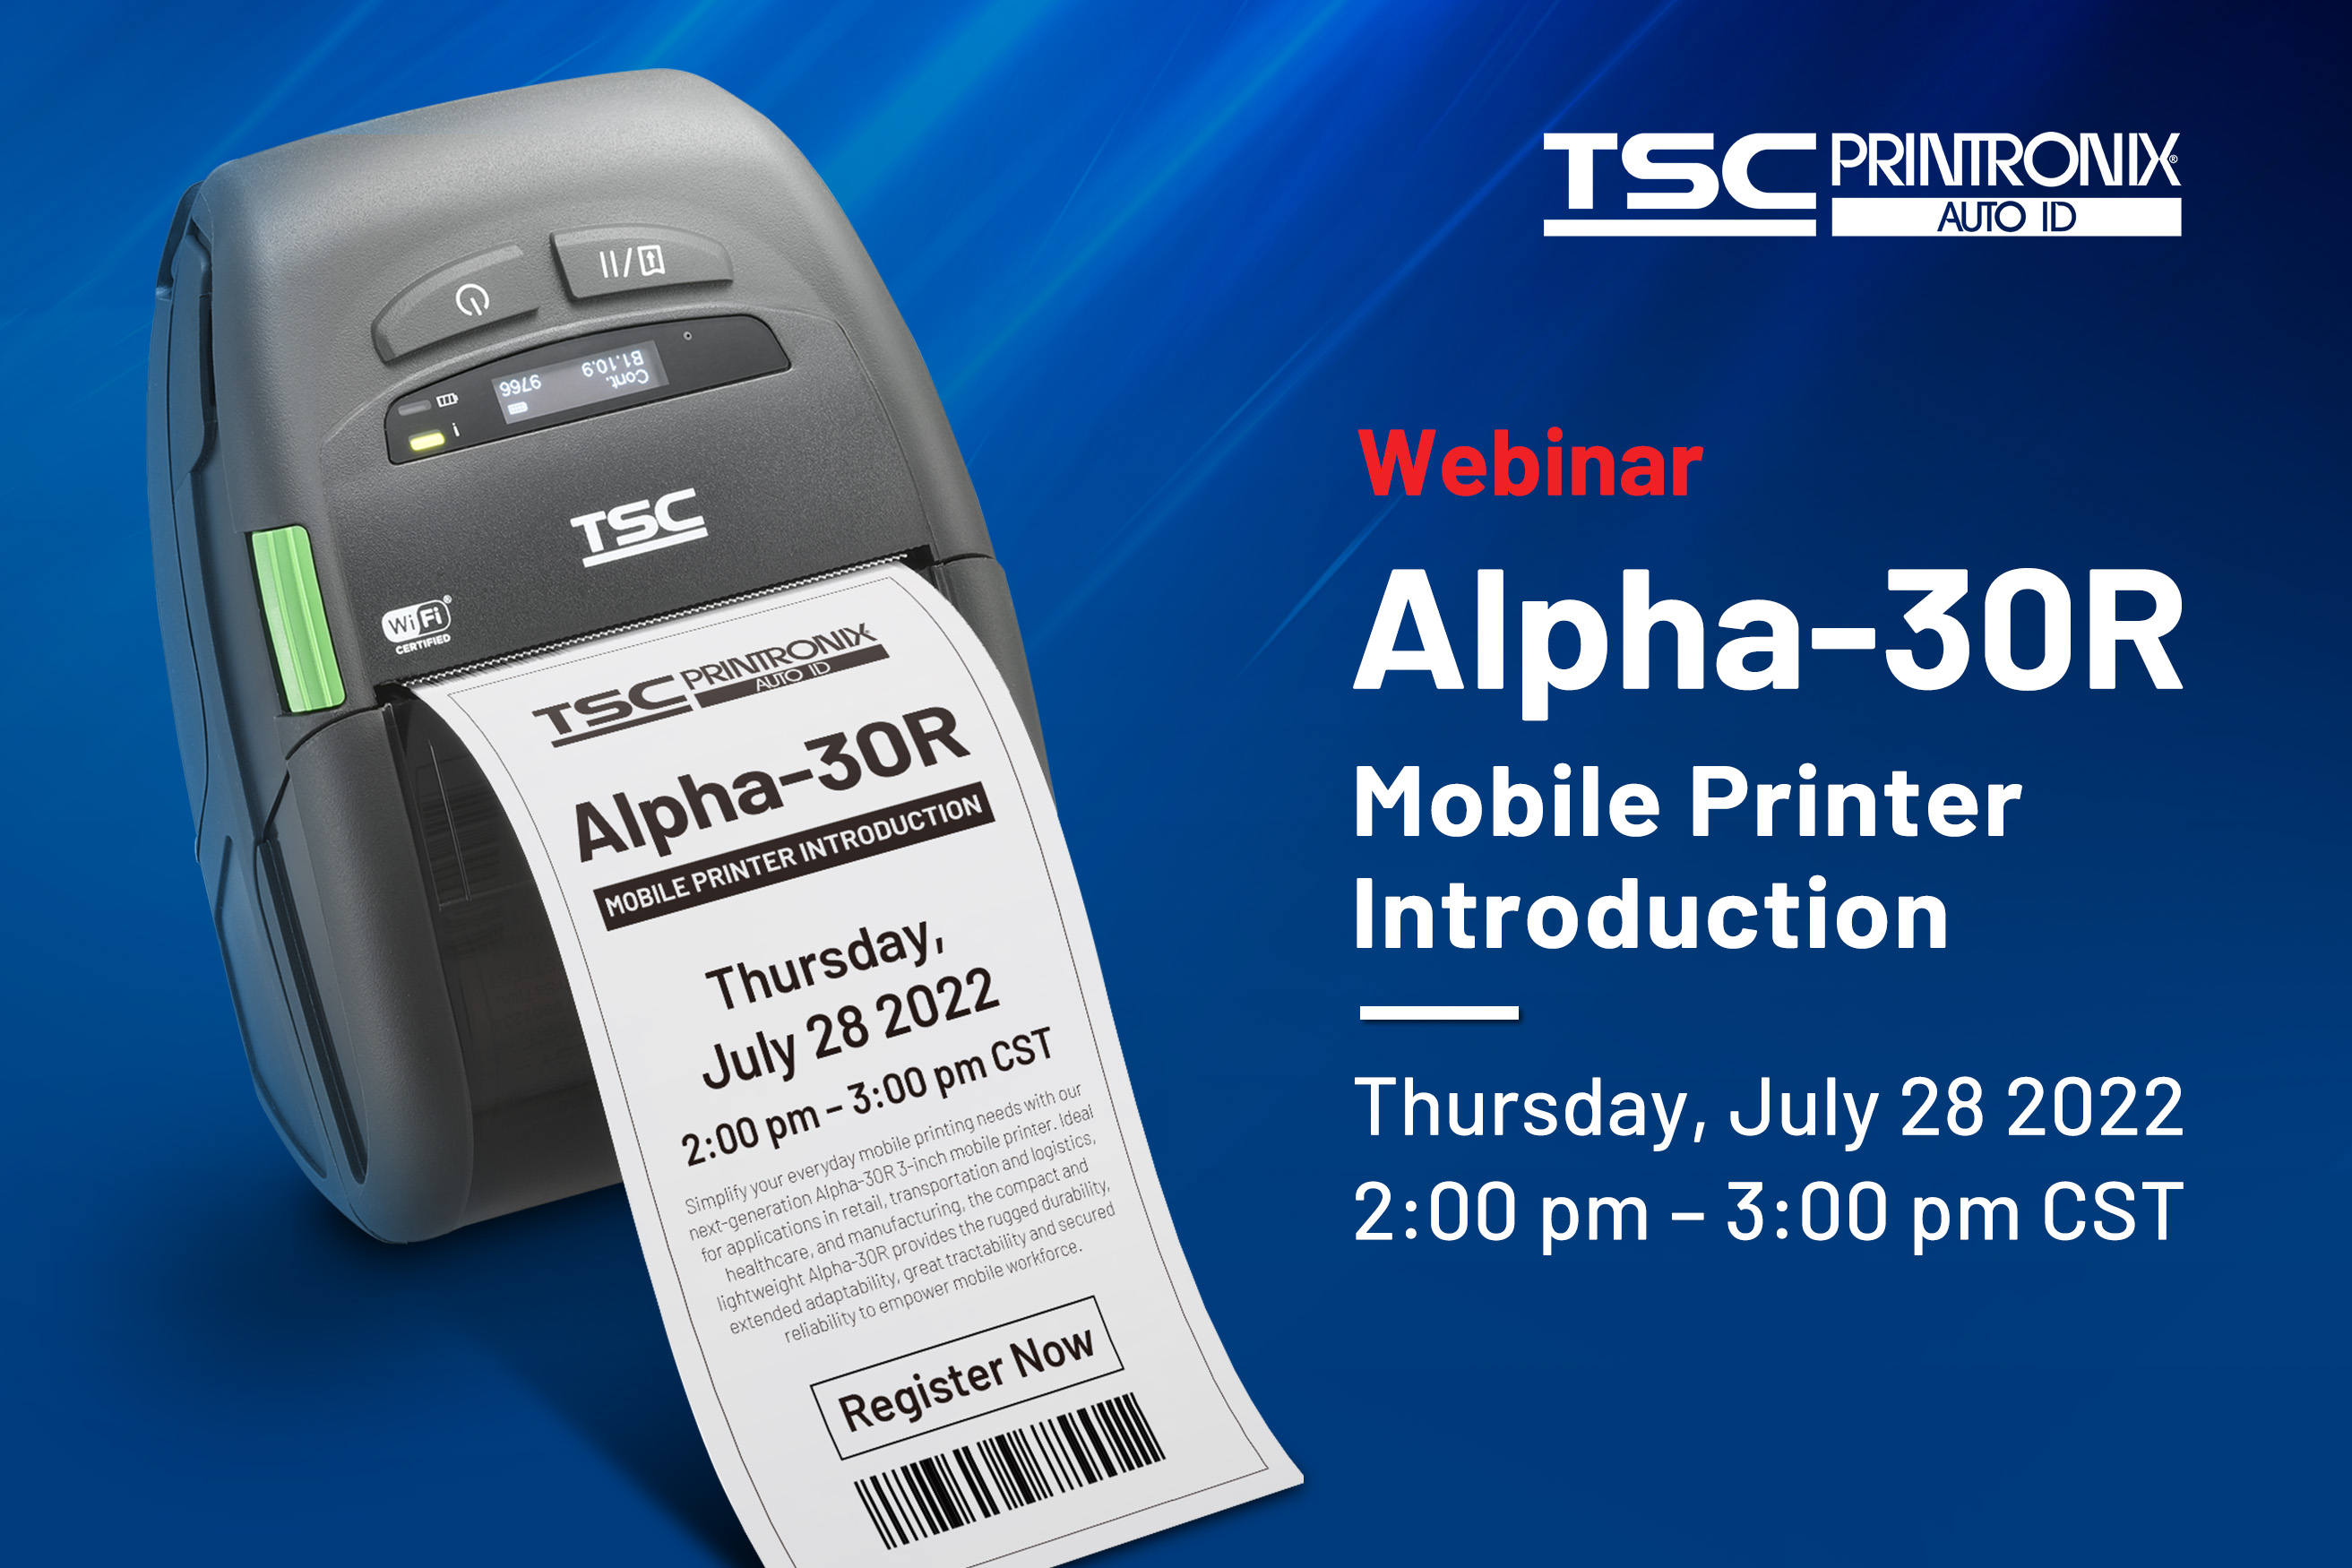 Alpha-30R mobile printer introduction